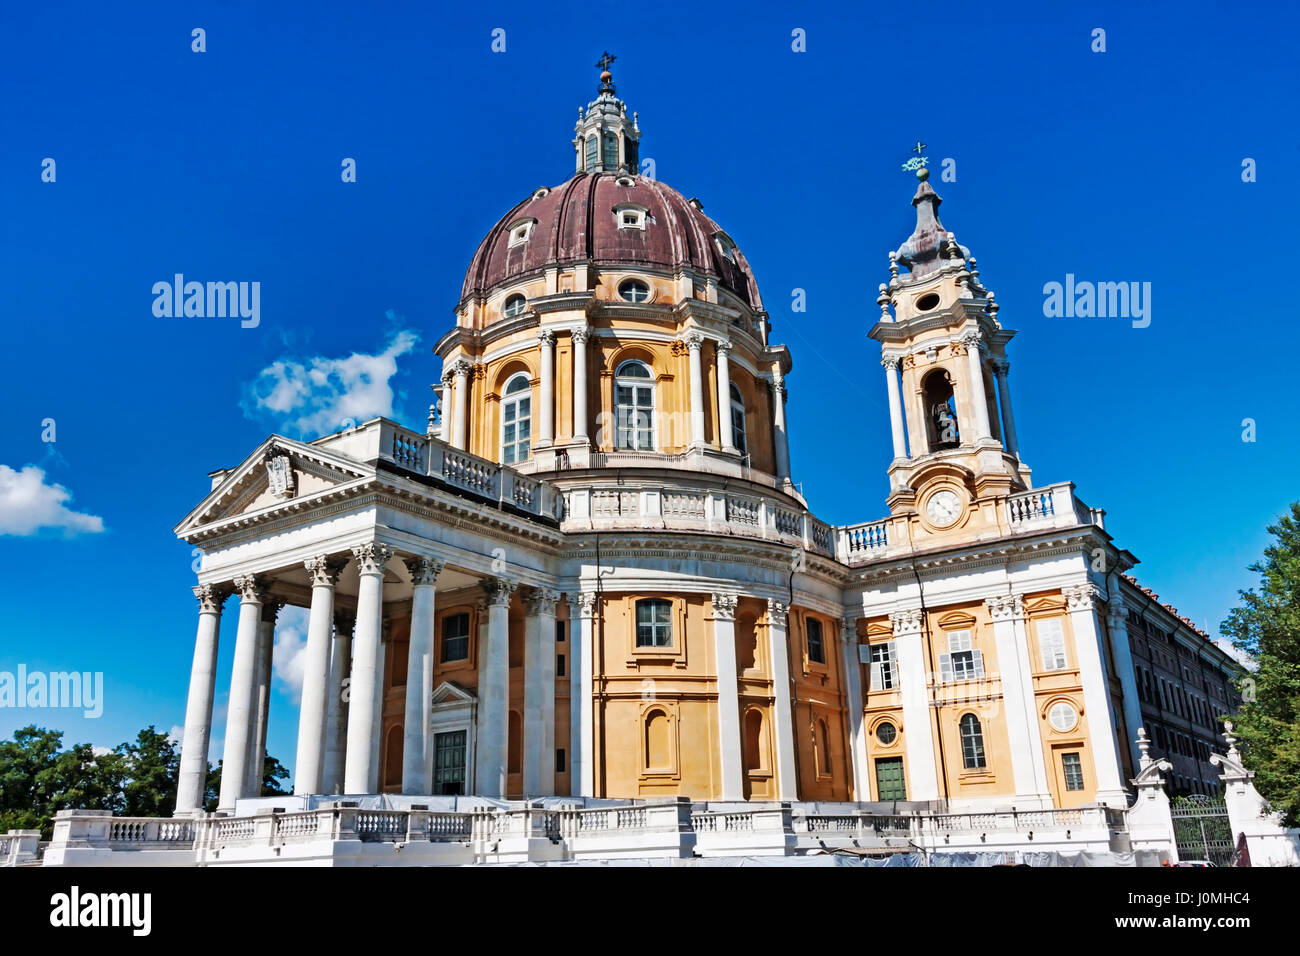 Basilica of Superga - Turin - Italy Stock Photo